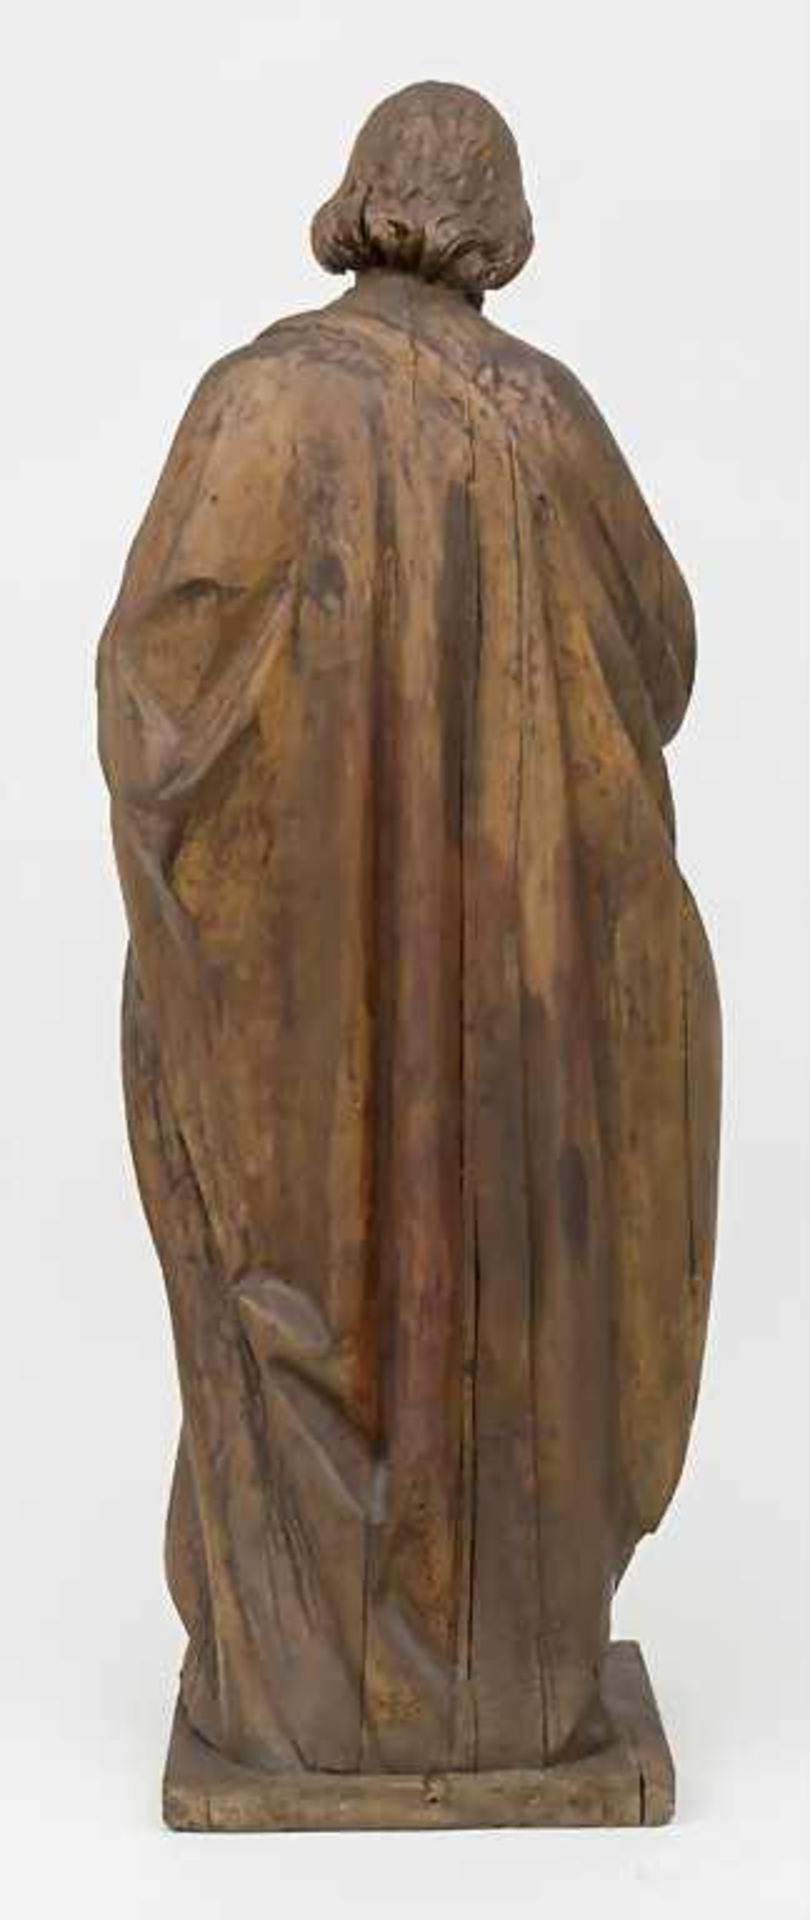 Heiligenfigur / A saint, 19. Jh. Technik: Holz, geschnitzt, lasiert,Höhe: 97 cm, Zustand: gut, - Bild 2 aus 2